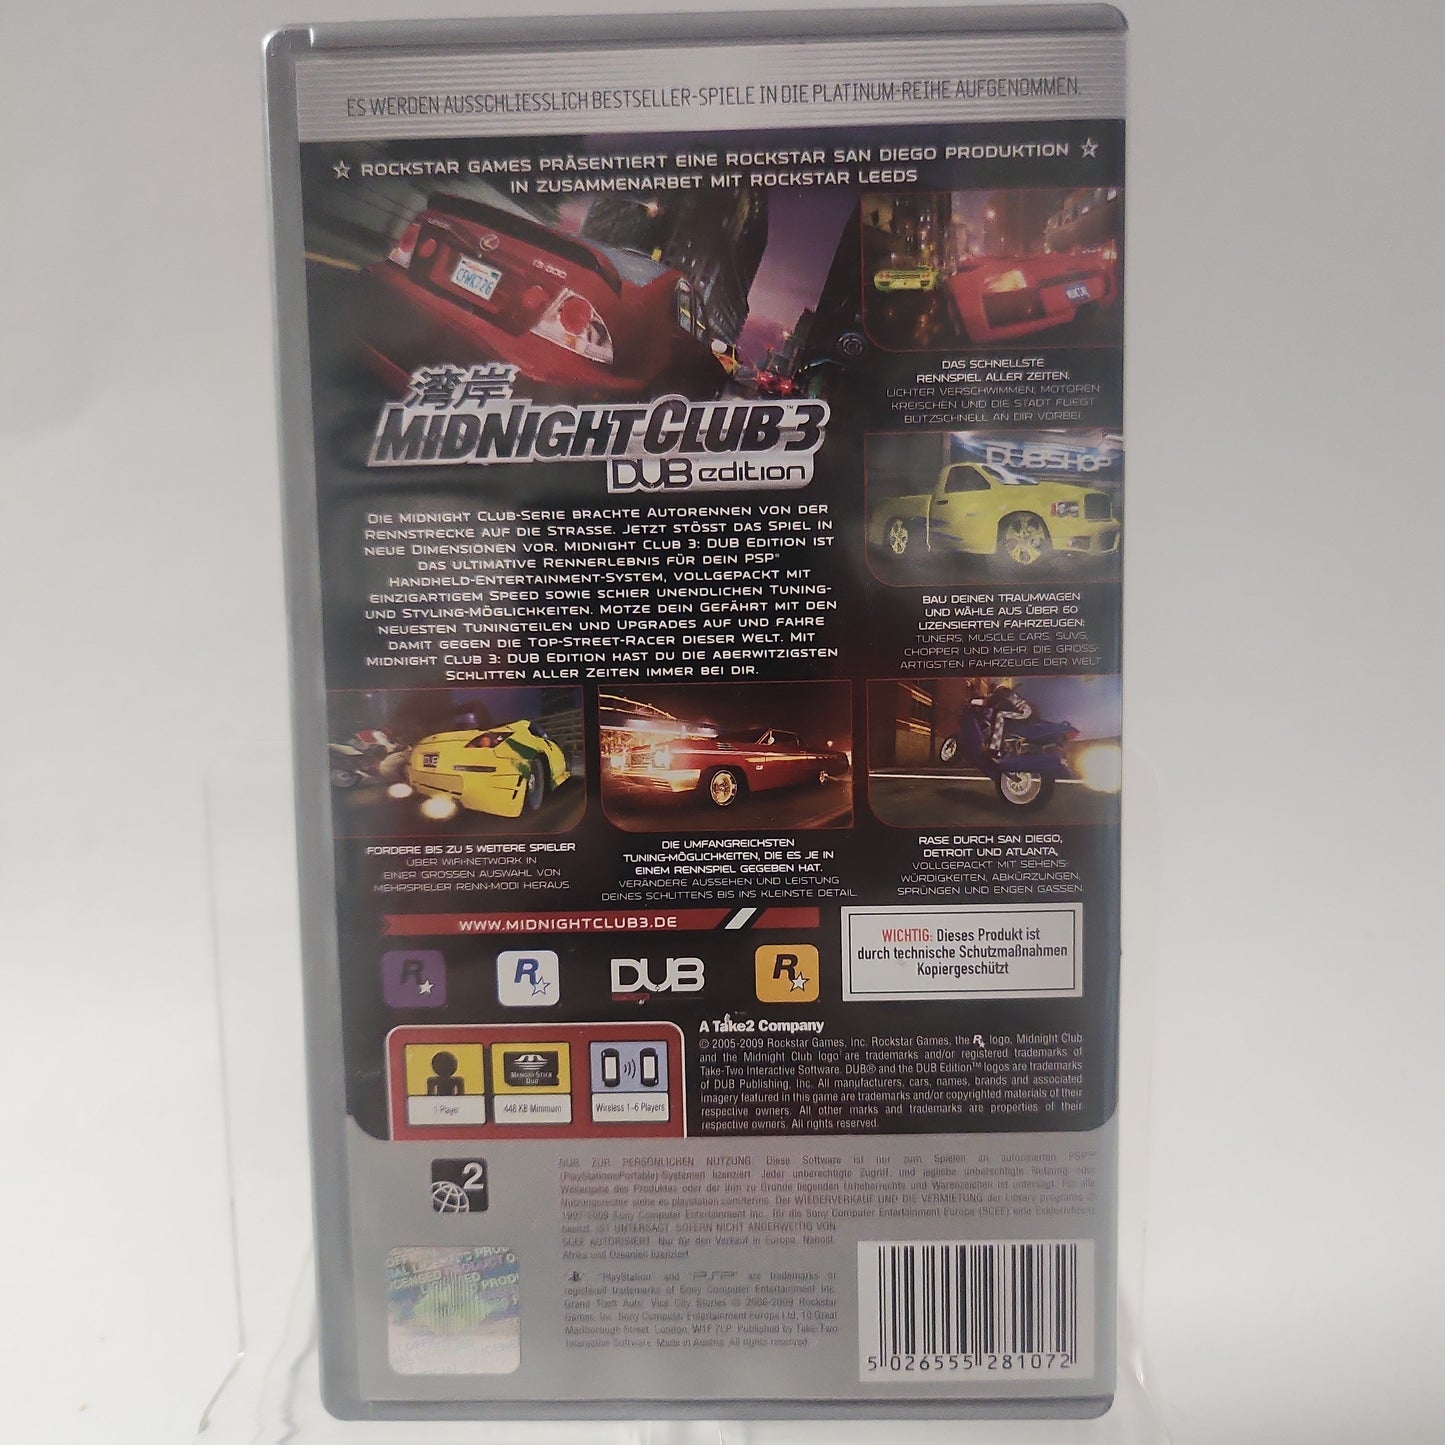 Midnight Club 3 DUB Edition Platinum Playstation Portable